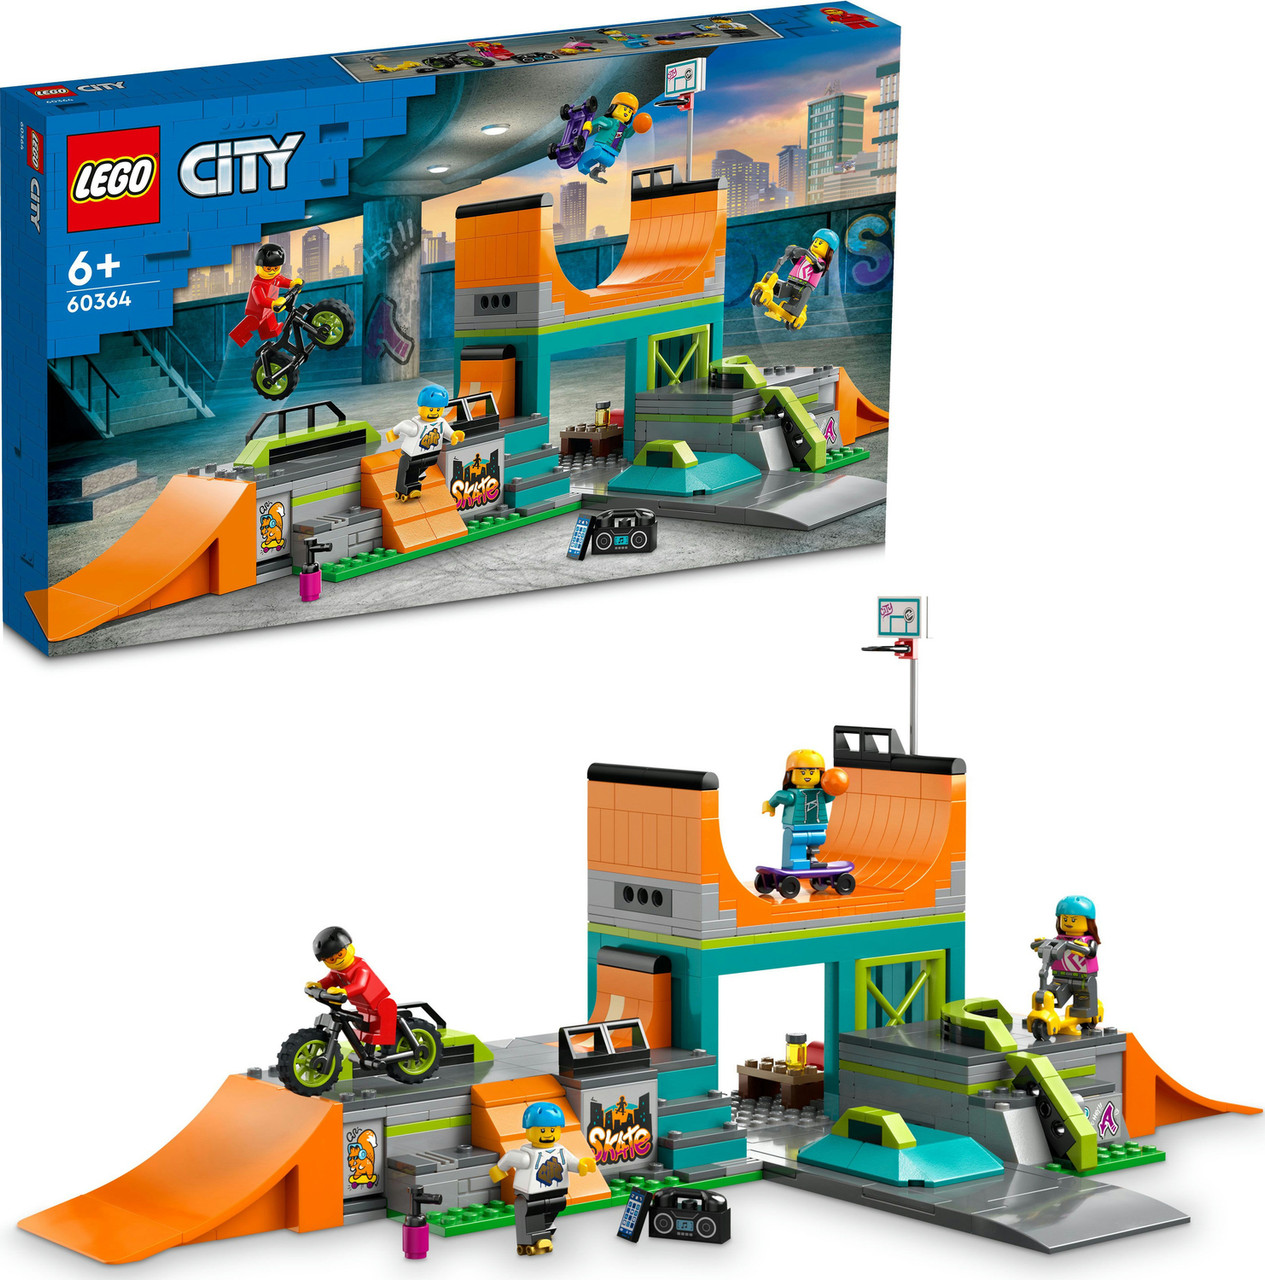 LEGO City Street Skate Park with Toy Bike 1